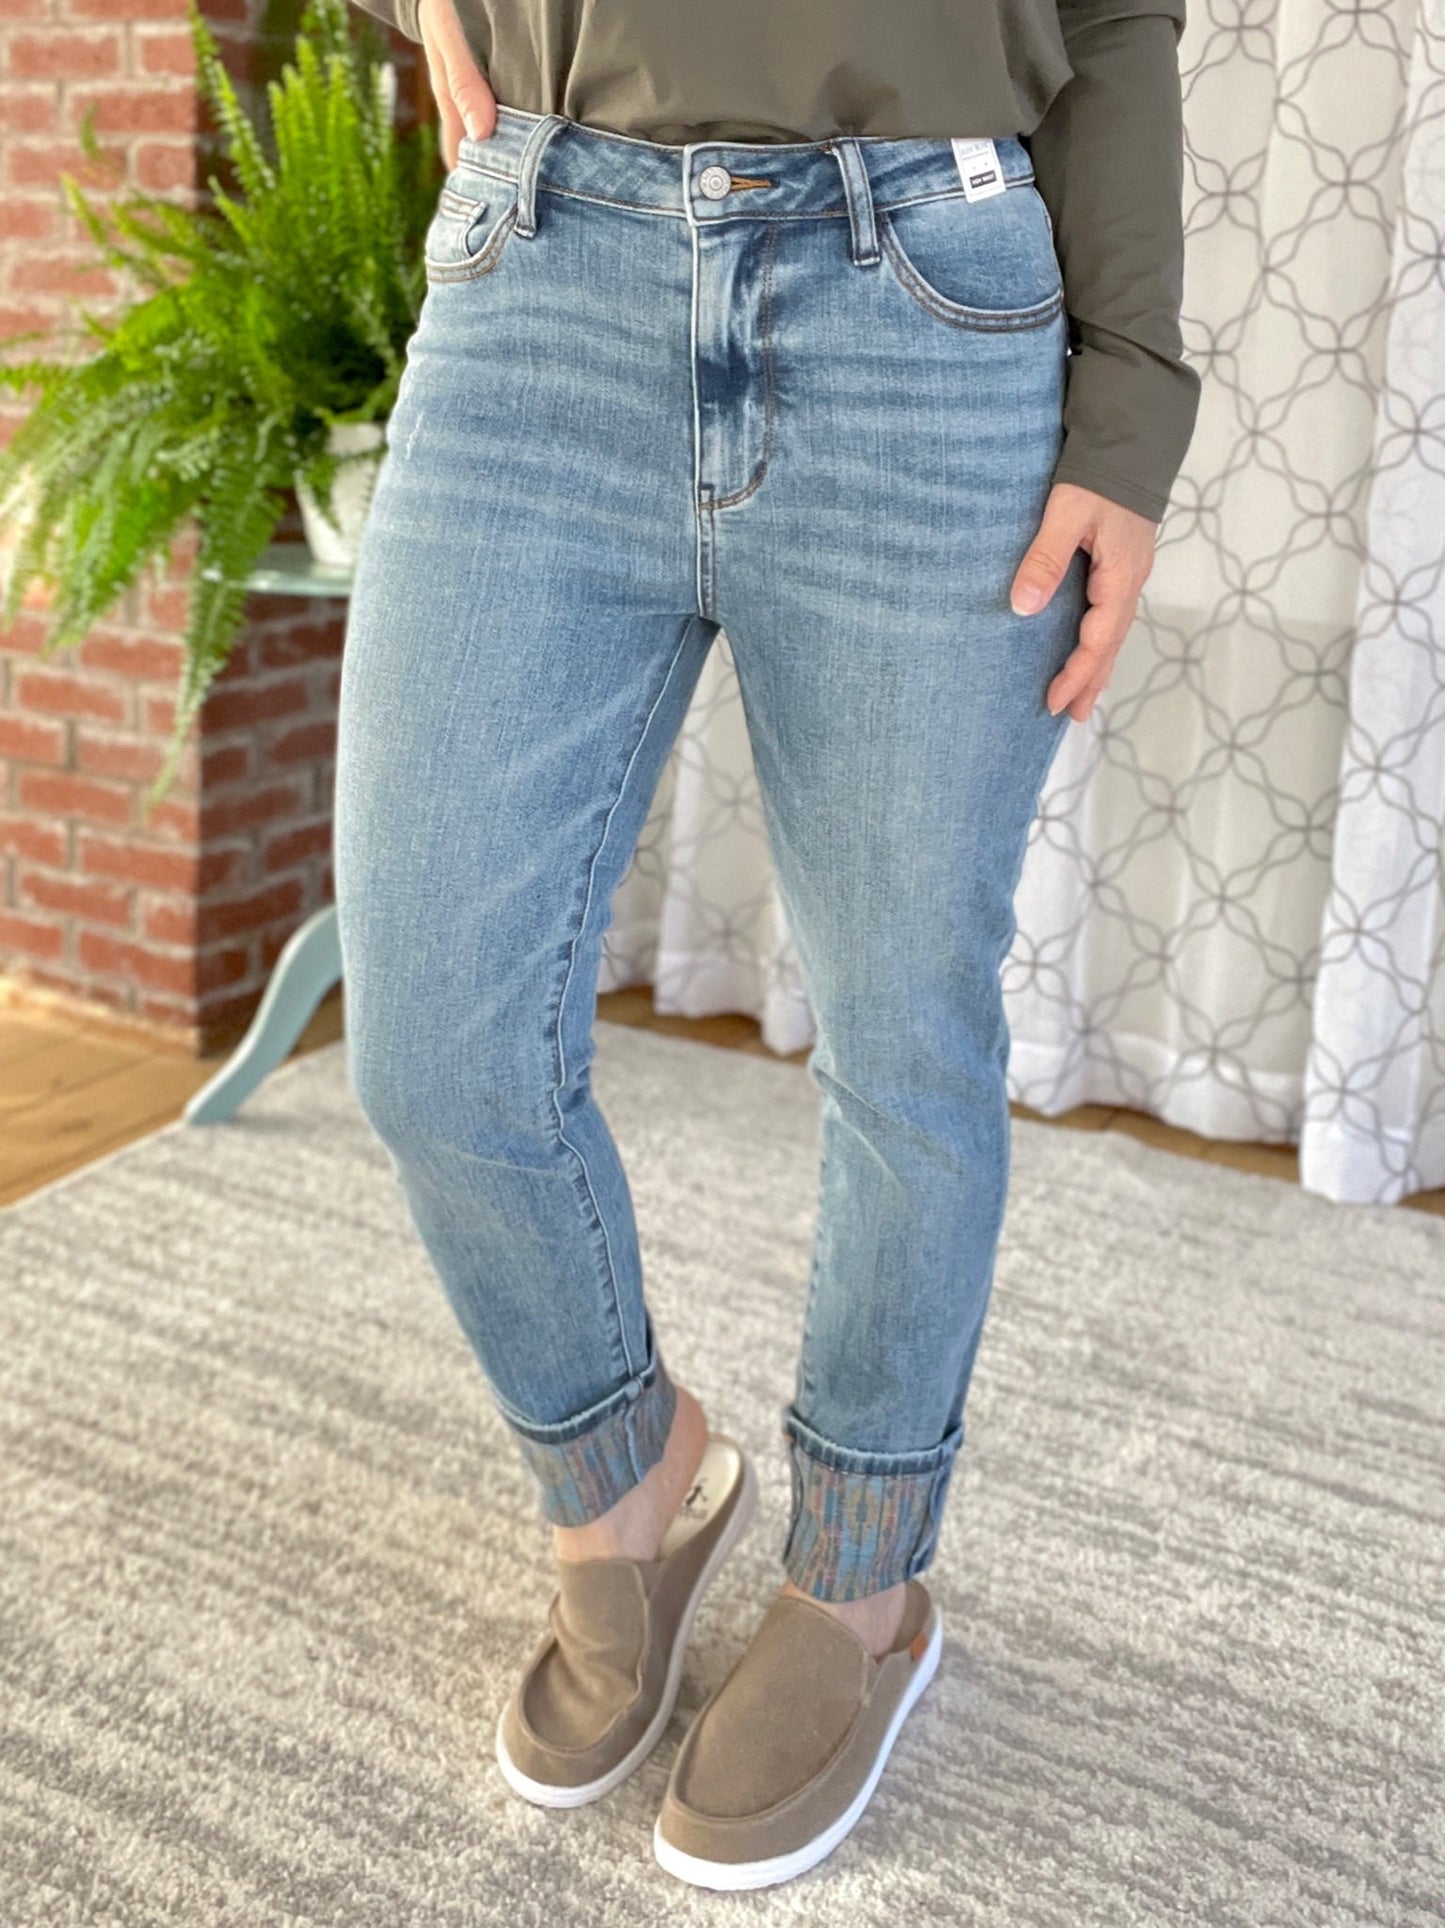 Southwestern Style Judy Blue Jeans